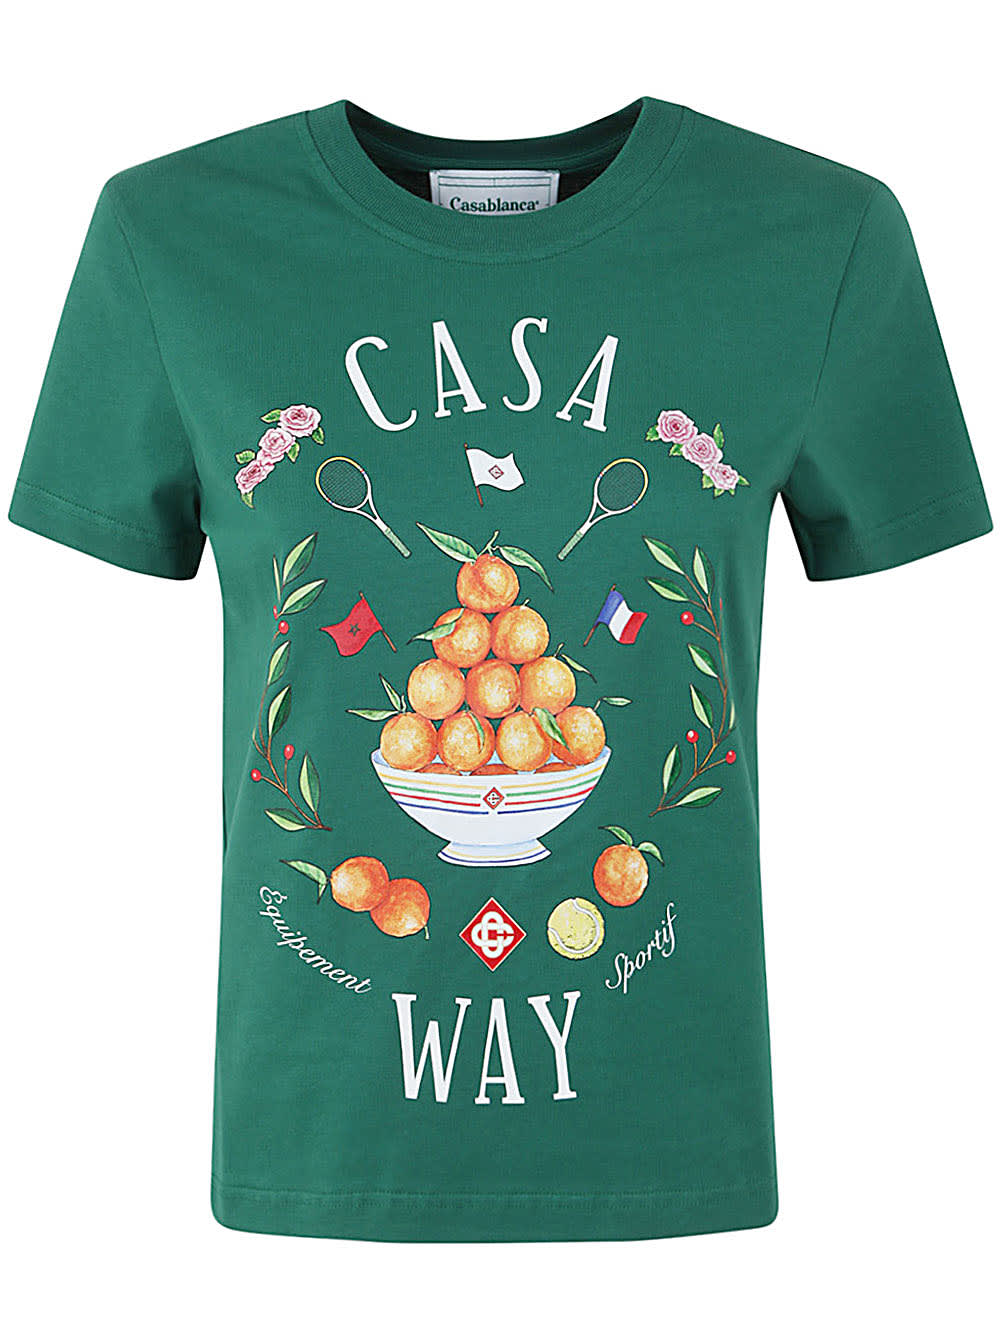 Shop Casablanca Casa Way Printed Fitted T-shirt